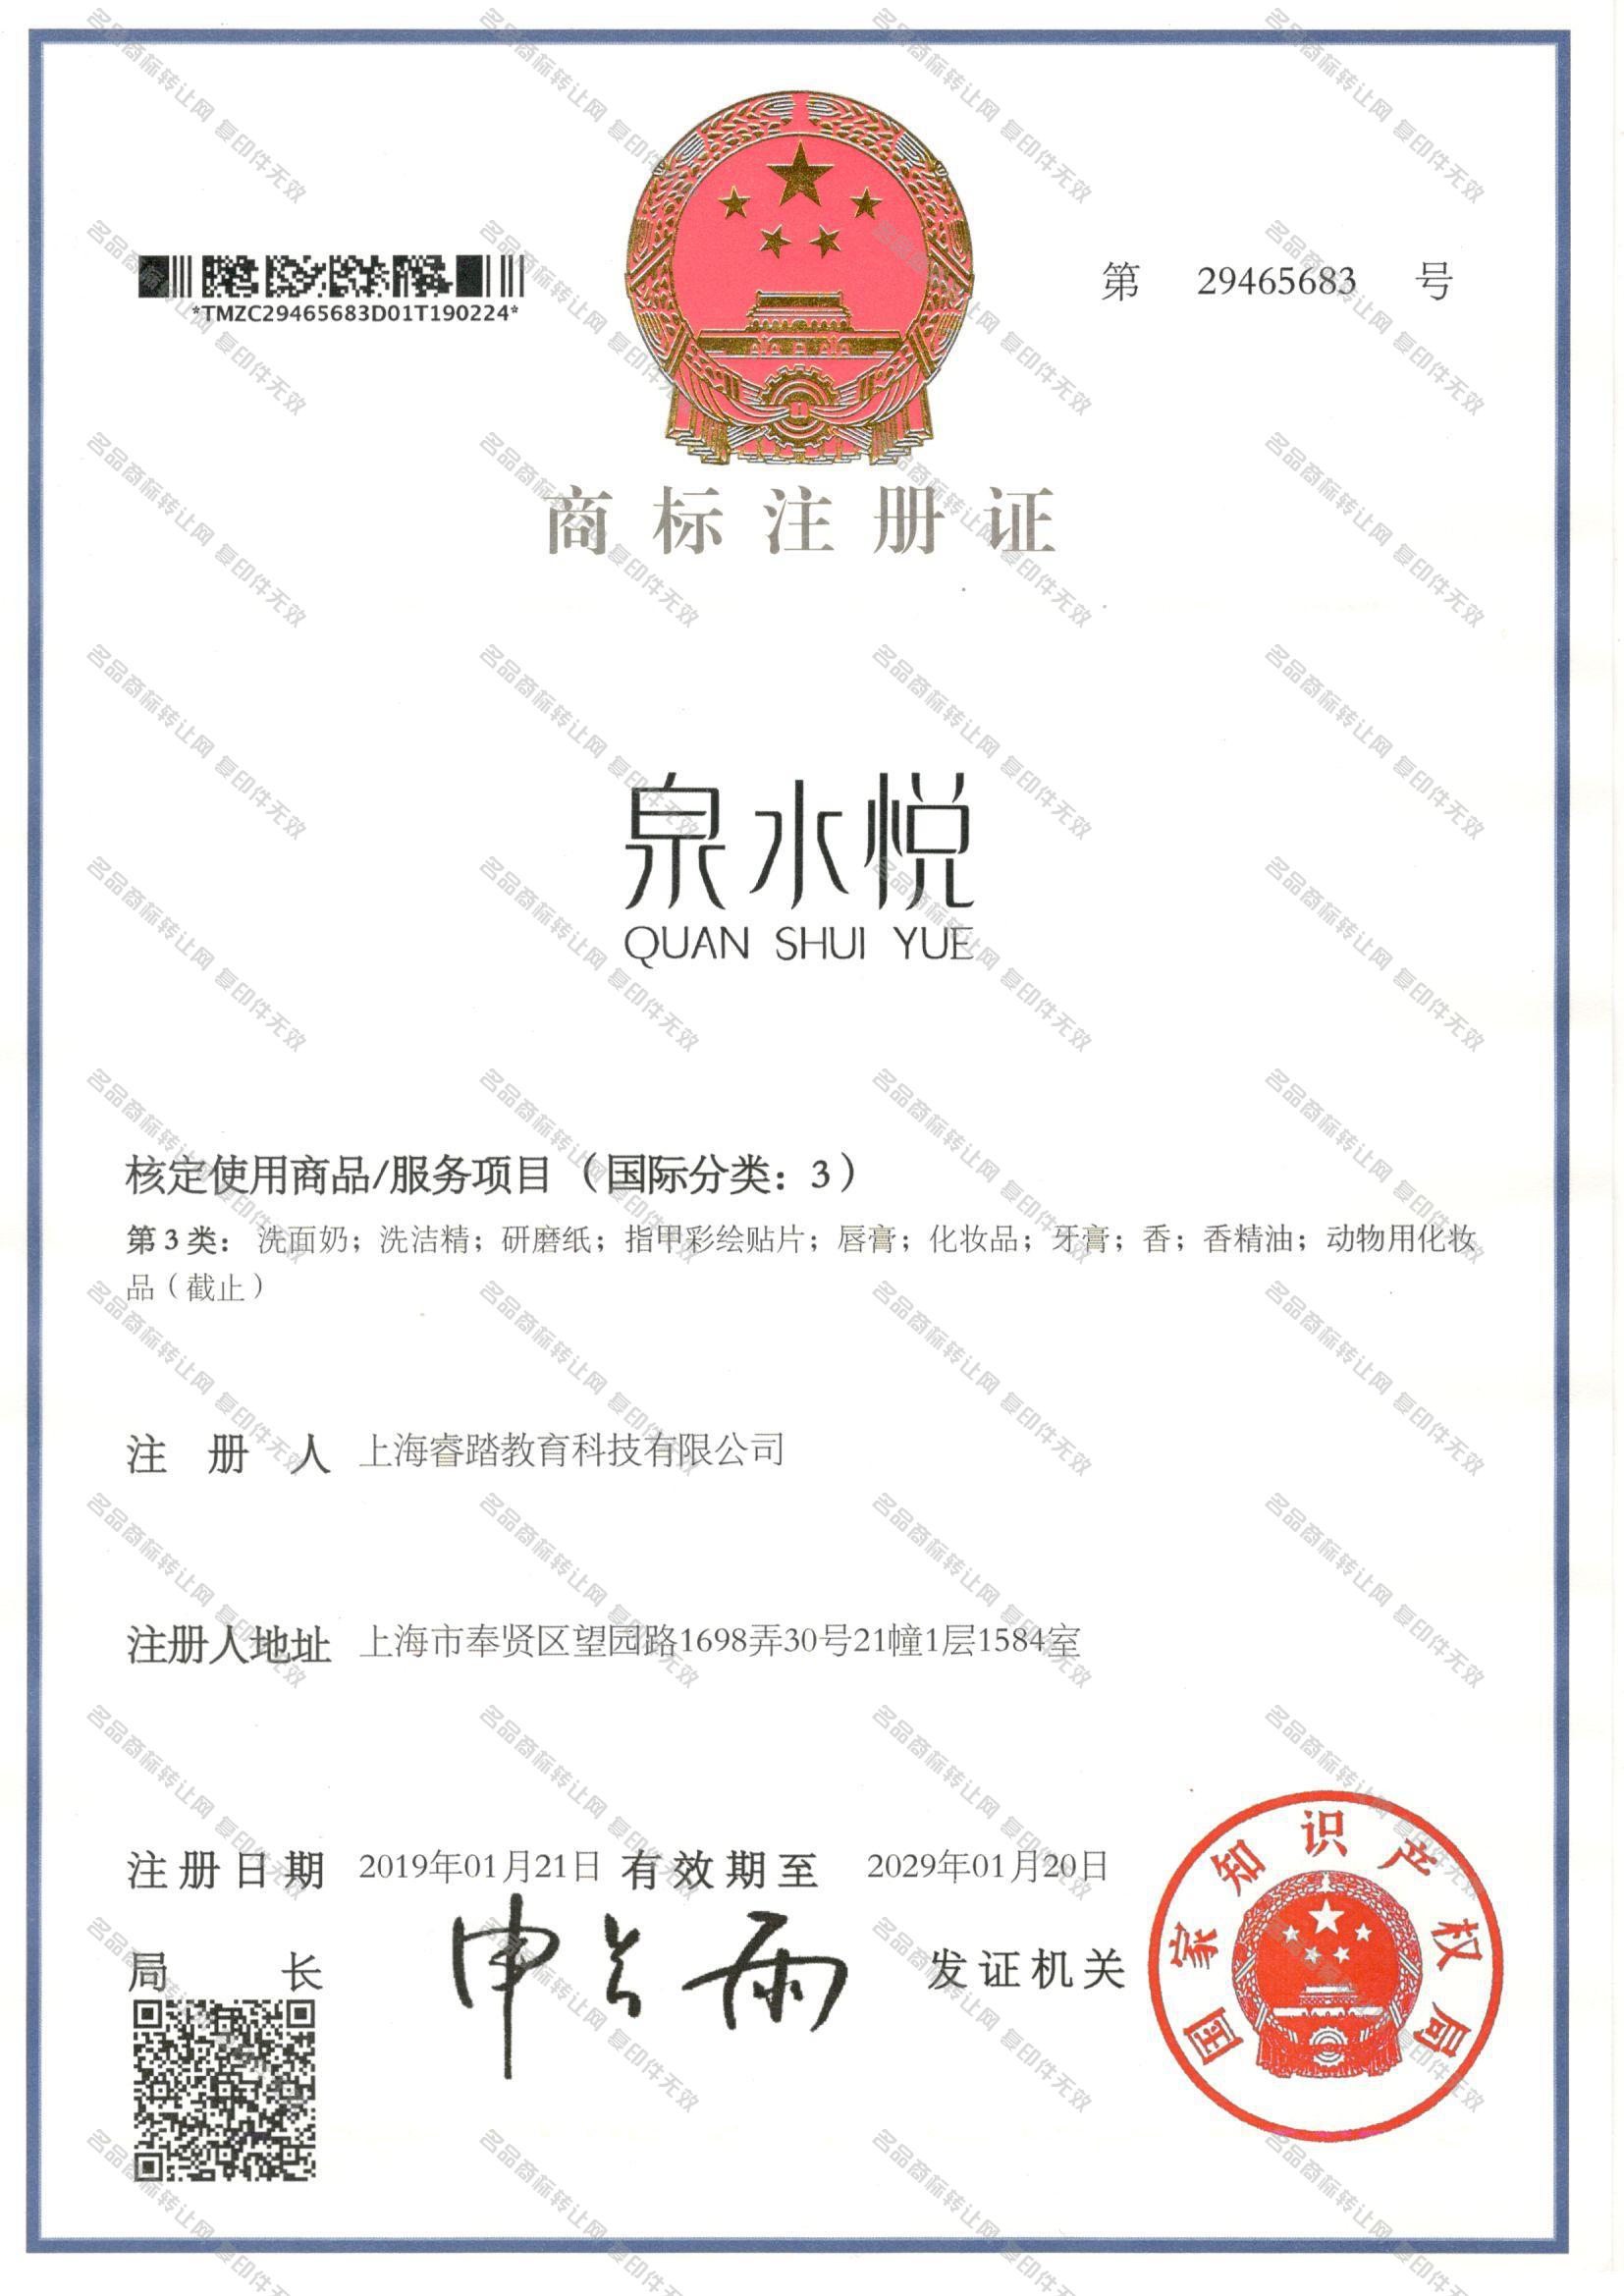 泉水悦 QUANSHUIYUE注册证